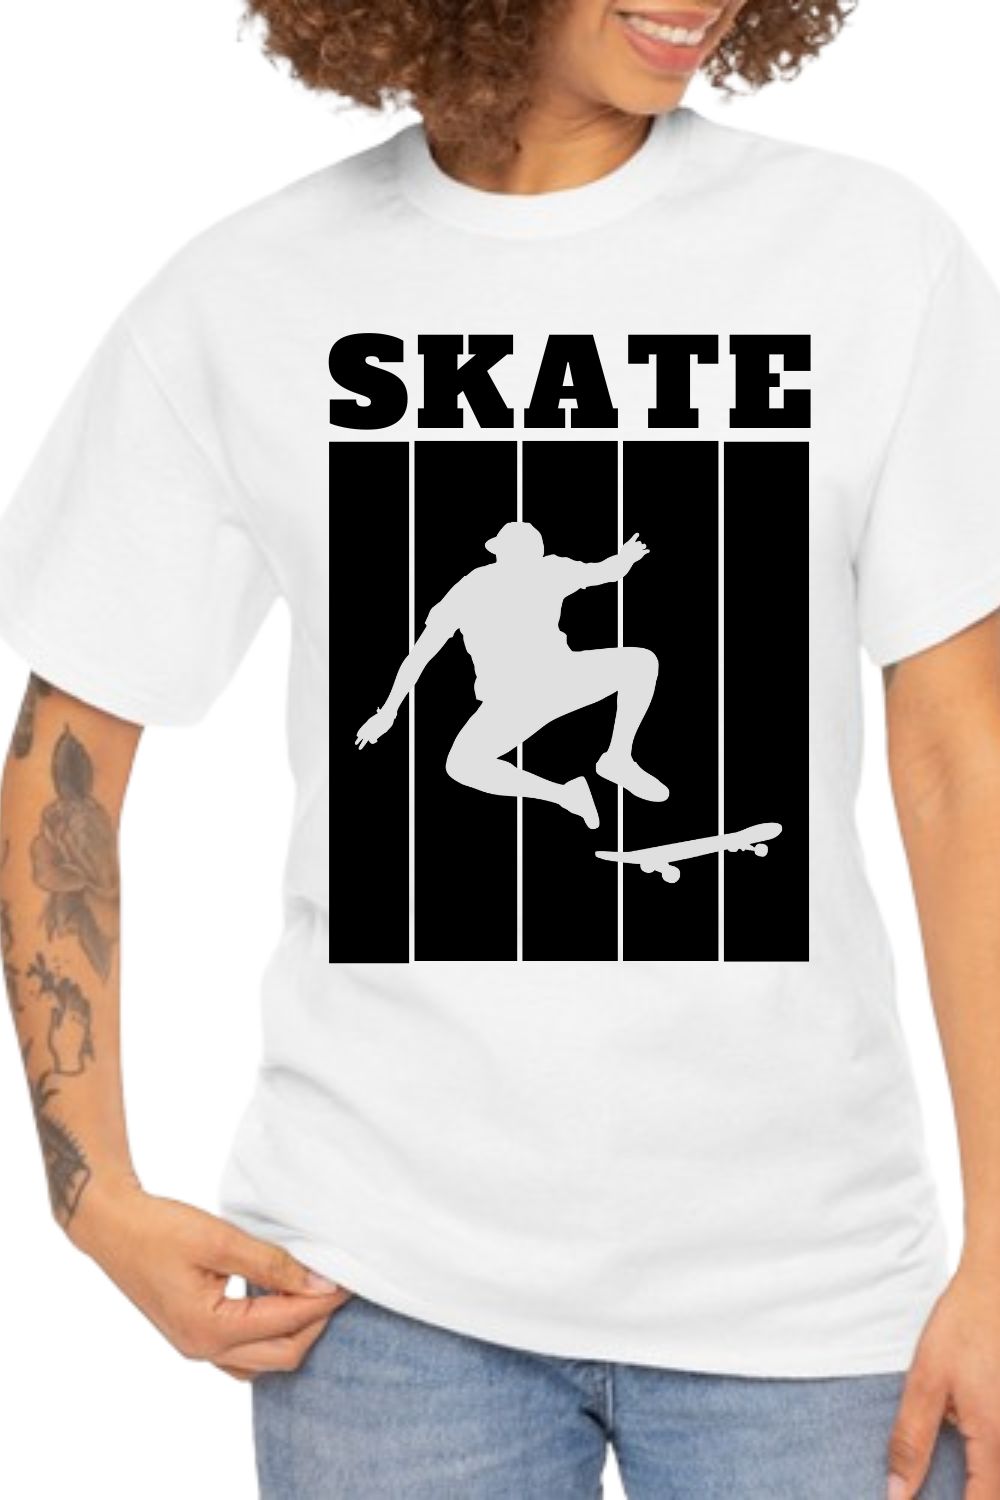 skate t-shirt design pinterest preview image.